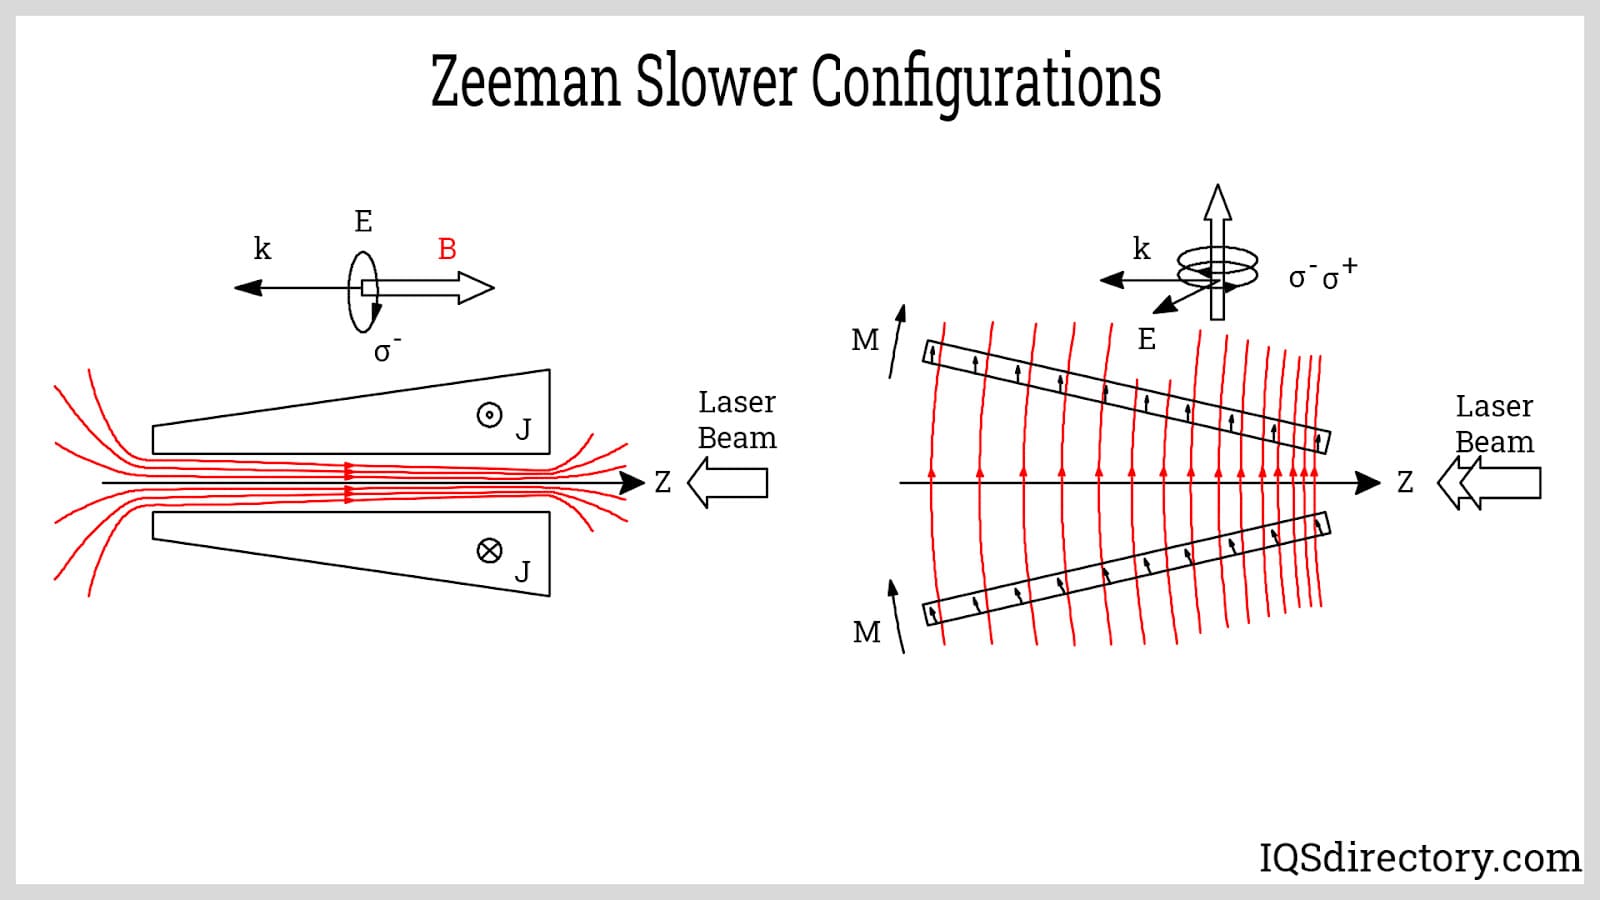 Zeeman Slower Configurations